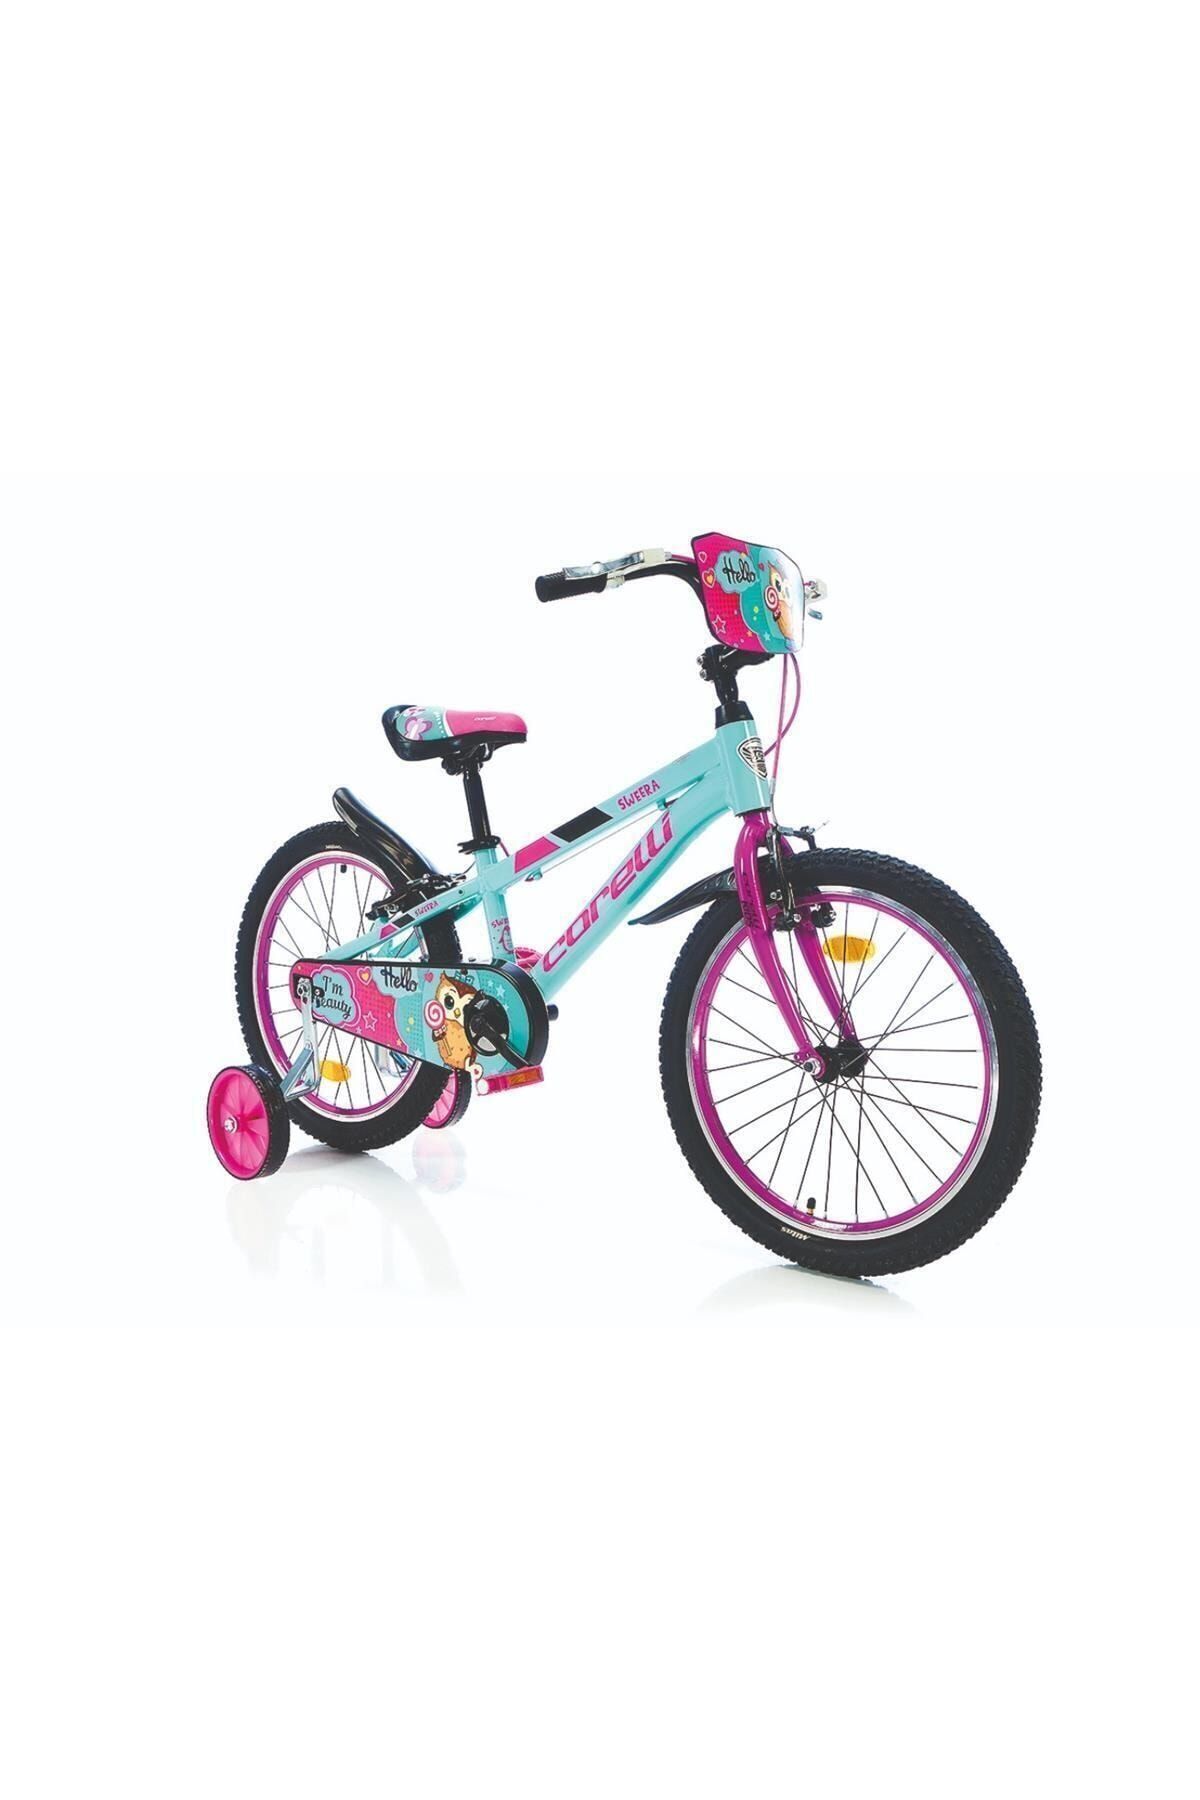 Corelli Swera Kız Çocuk Bisikleti V 20 Jant Yeşil-pembe